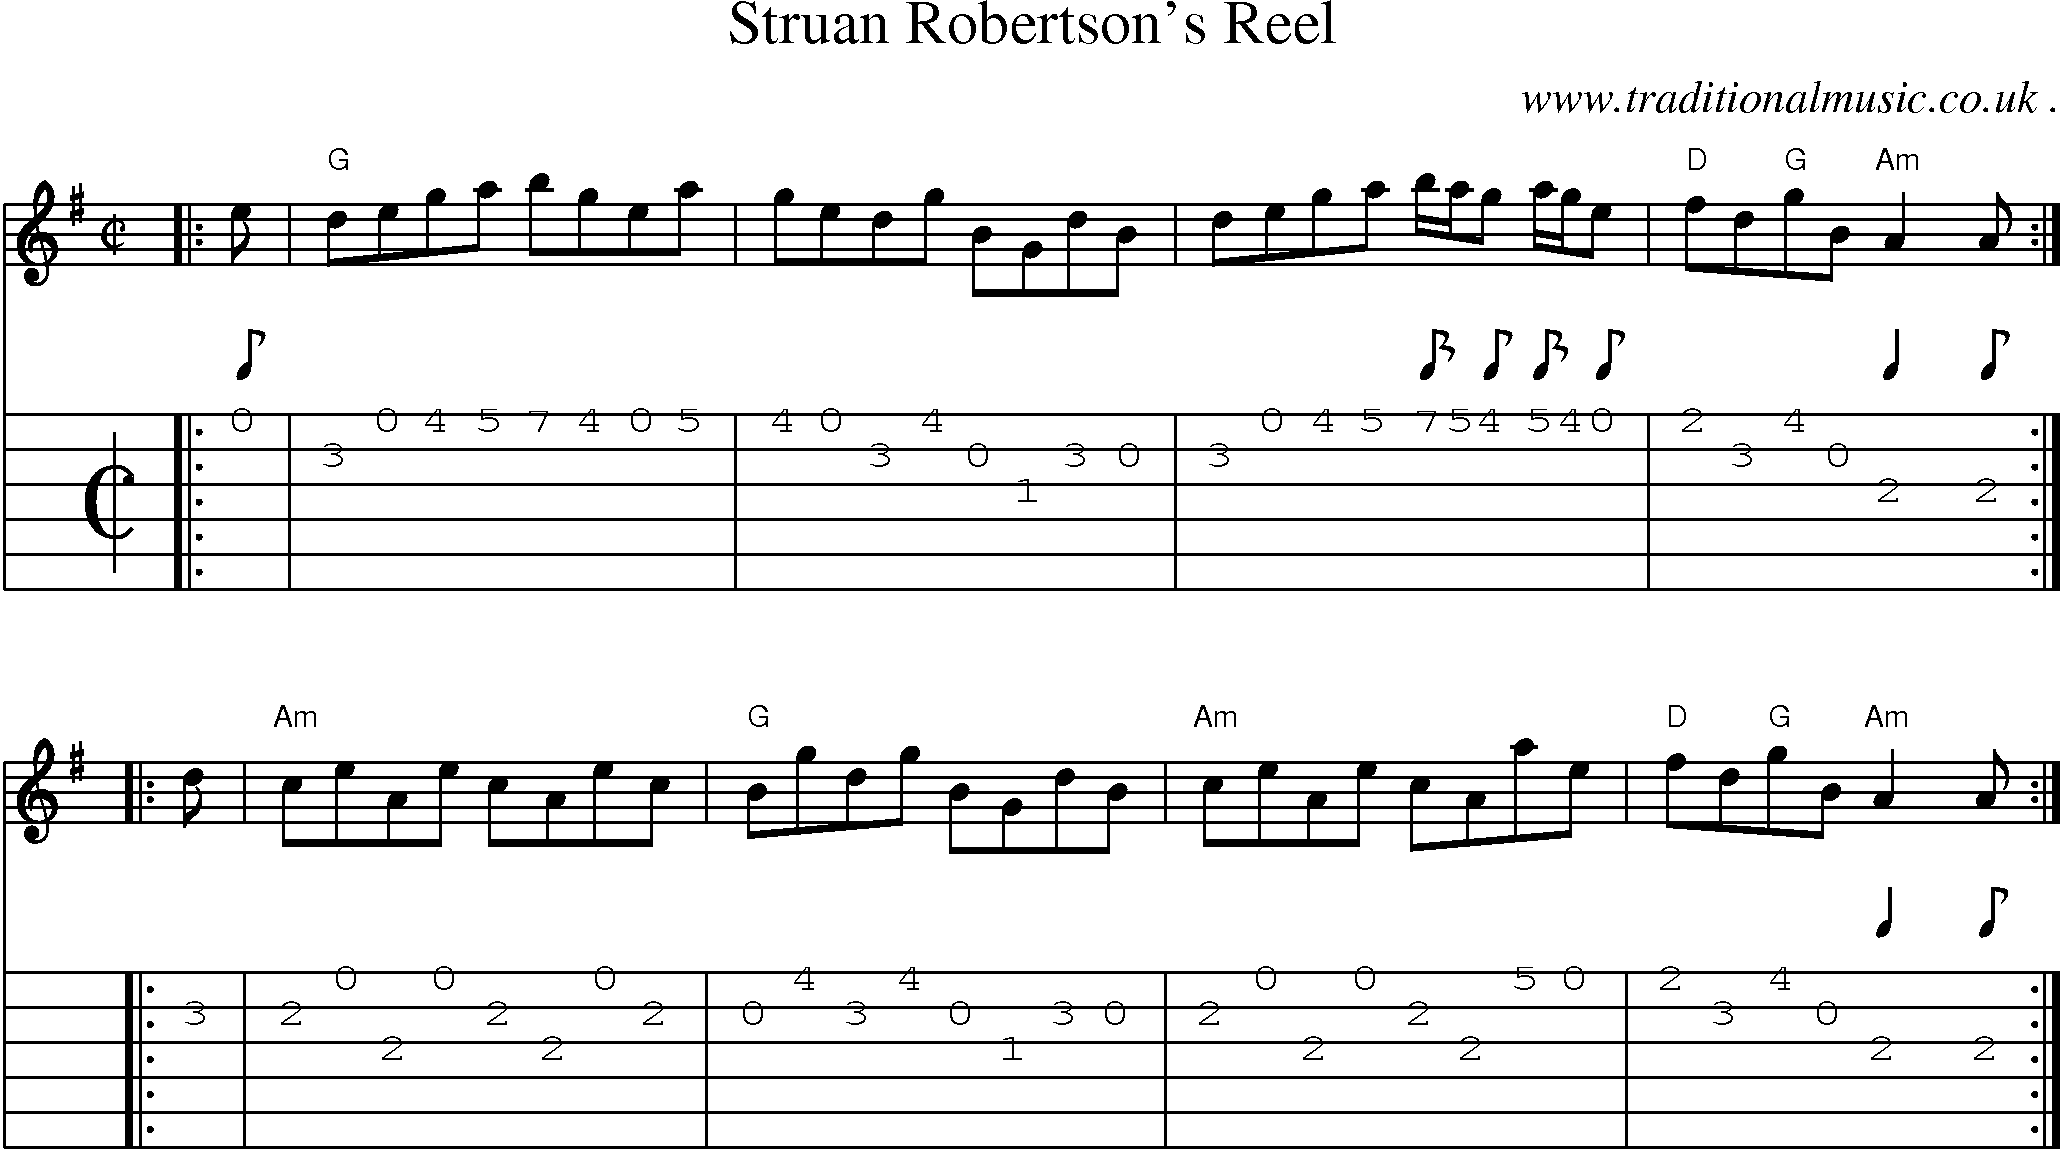 Sheet-music  score, Chords and Guitar Tabs for Struan Robertsons Reel